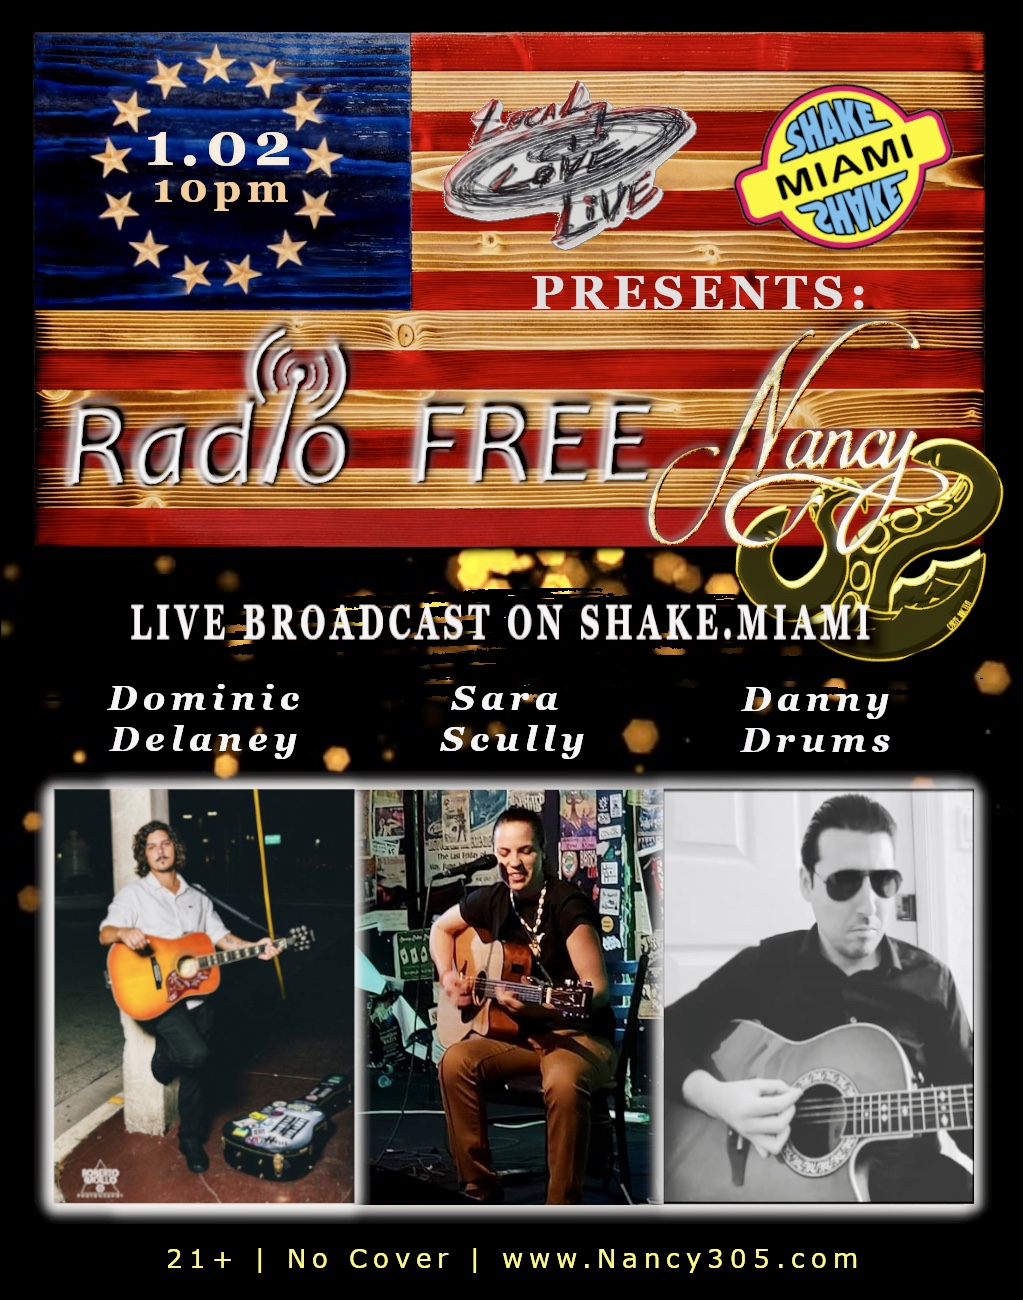 Radio Free Nancy! Presented by Local. Love. Live & Shake Miami!